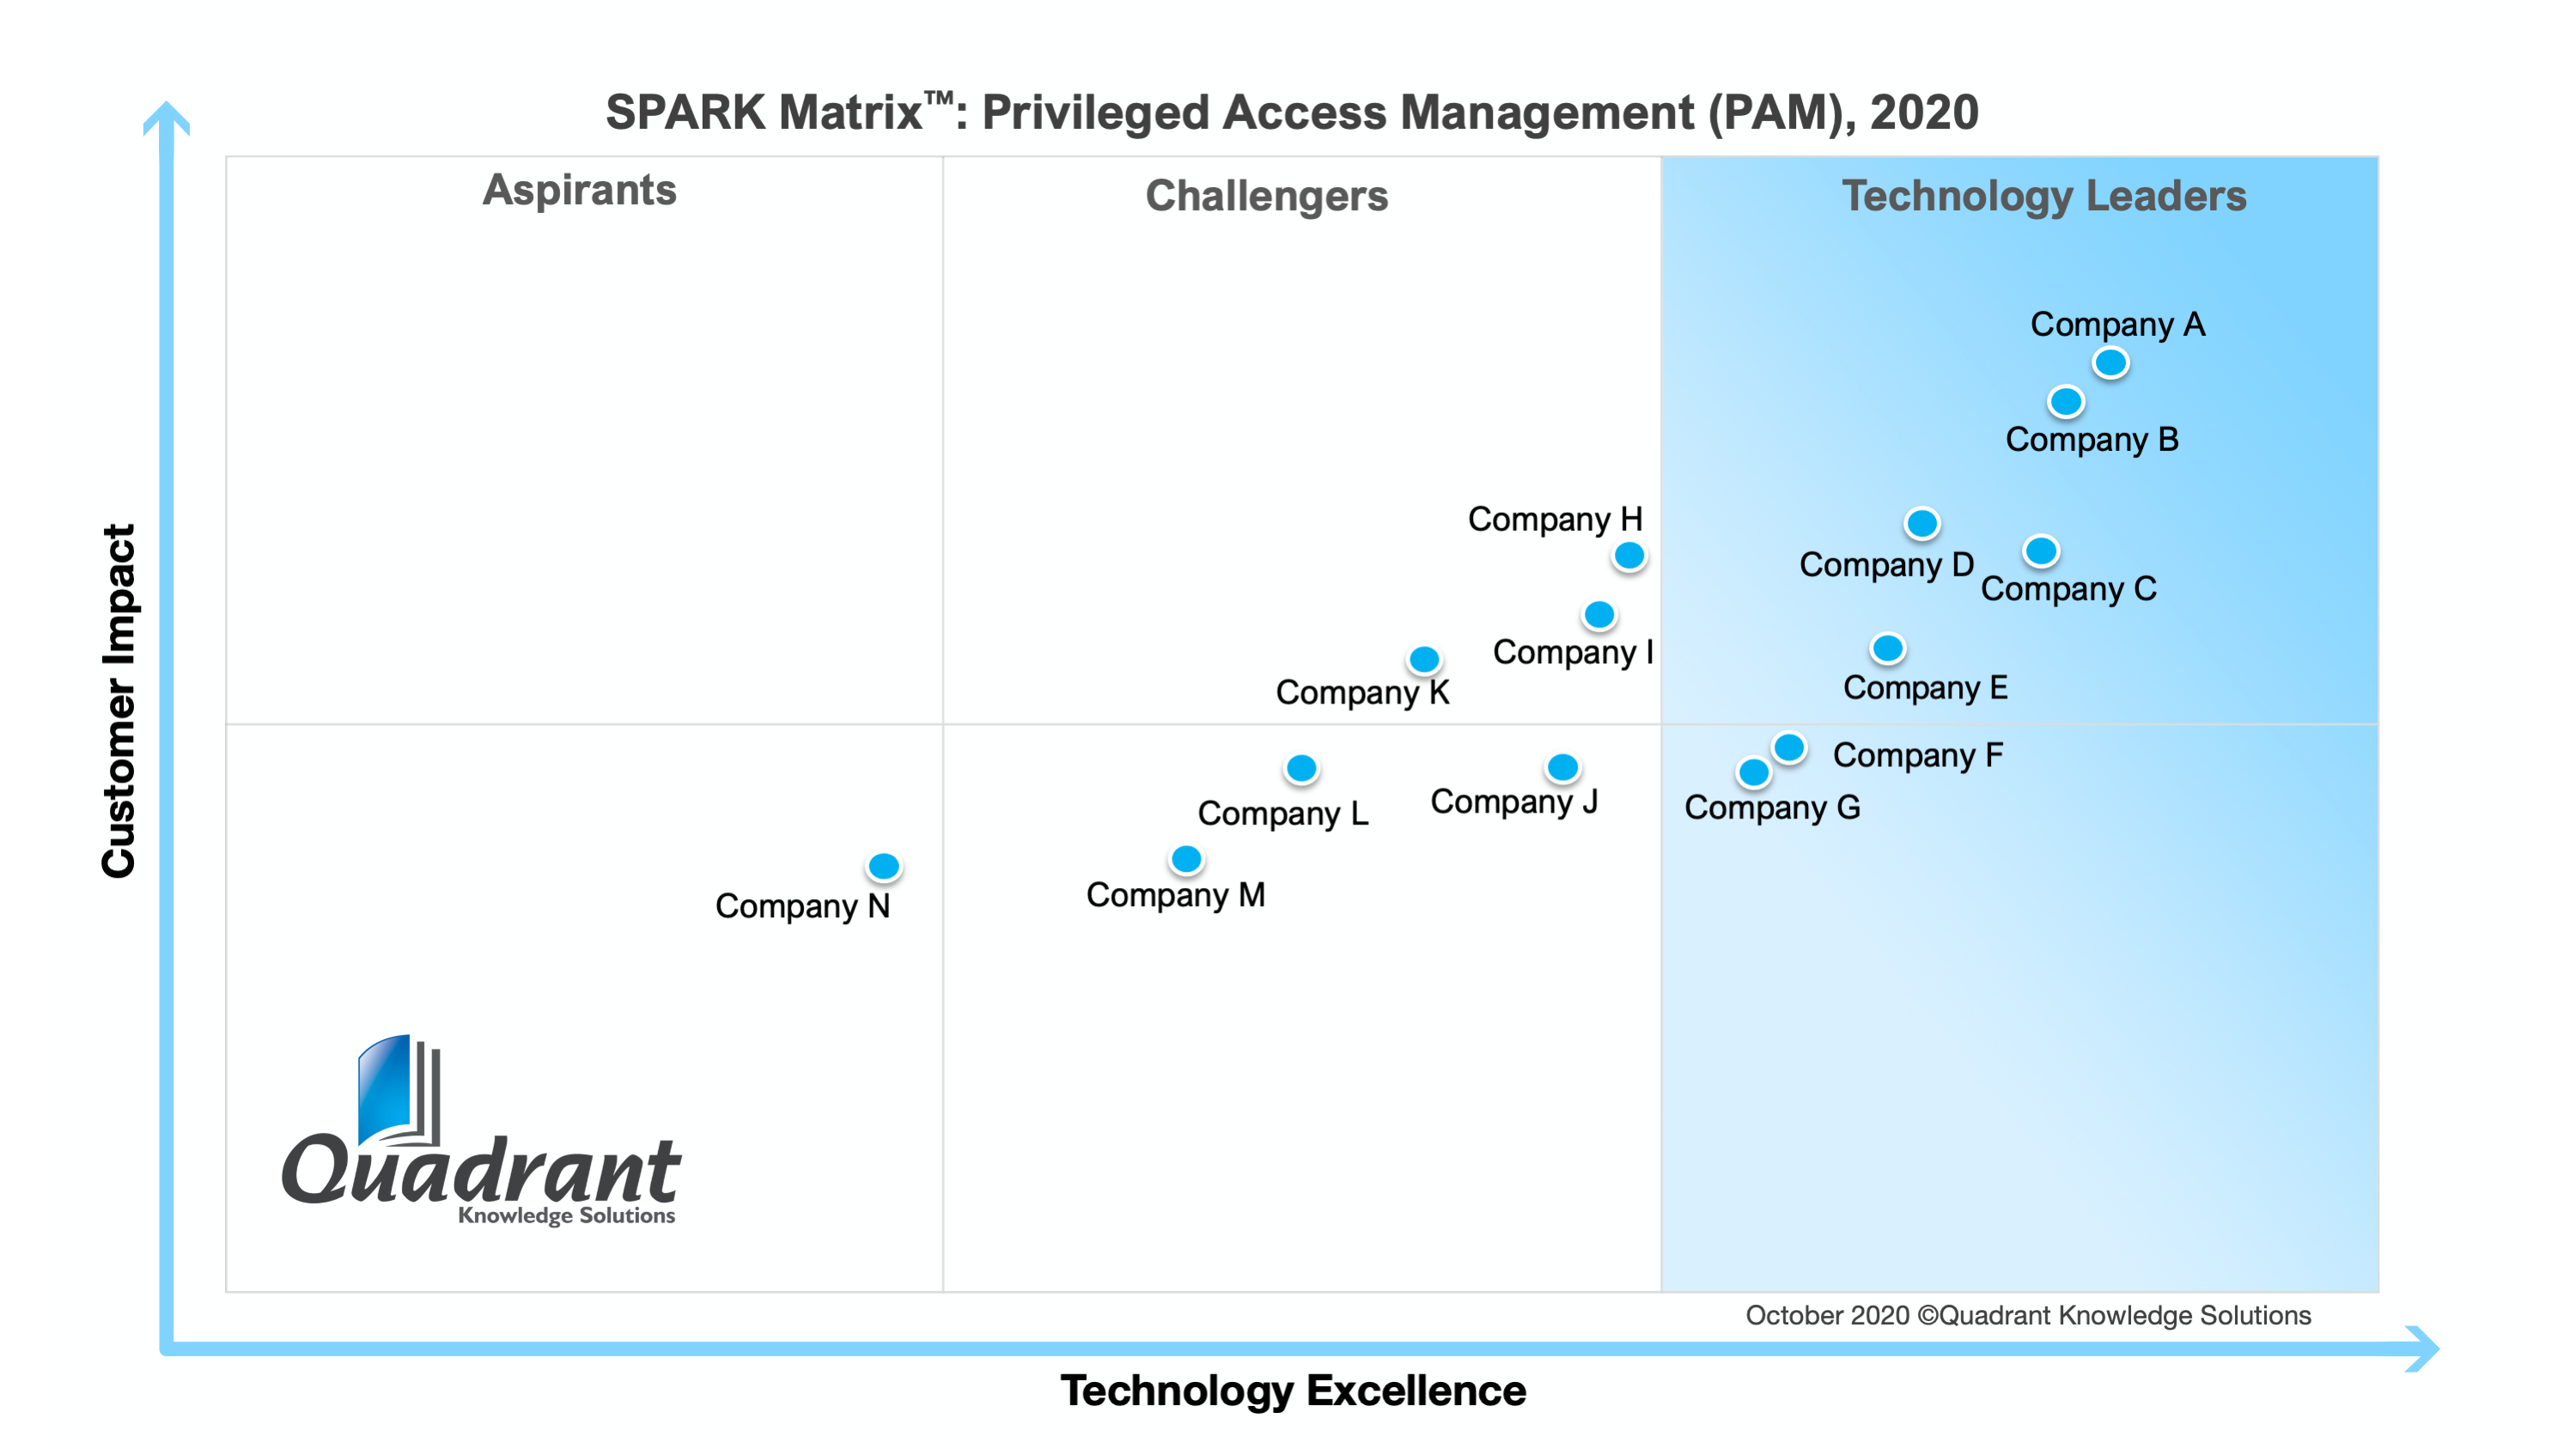 2020 SPARK Matrix Privileged Access Management Quadrant Knowledge Solutions